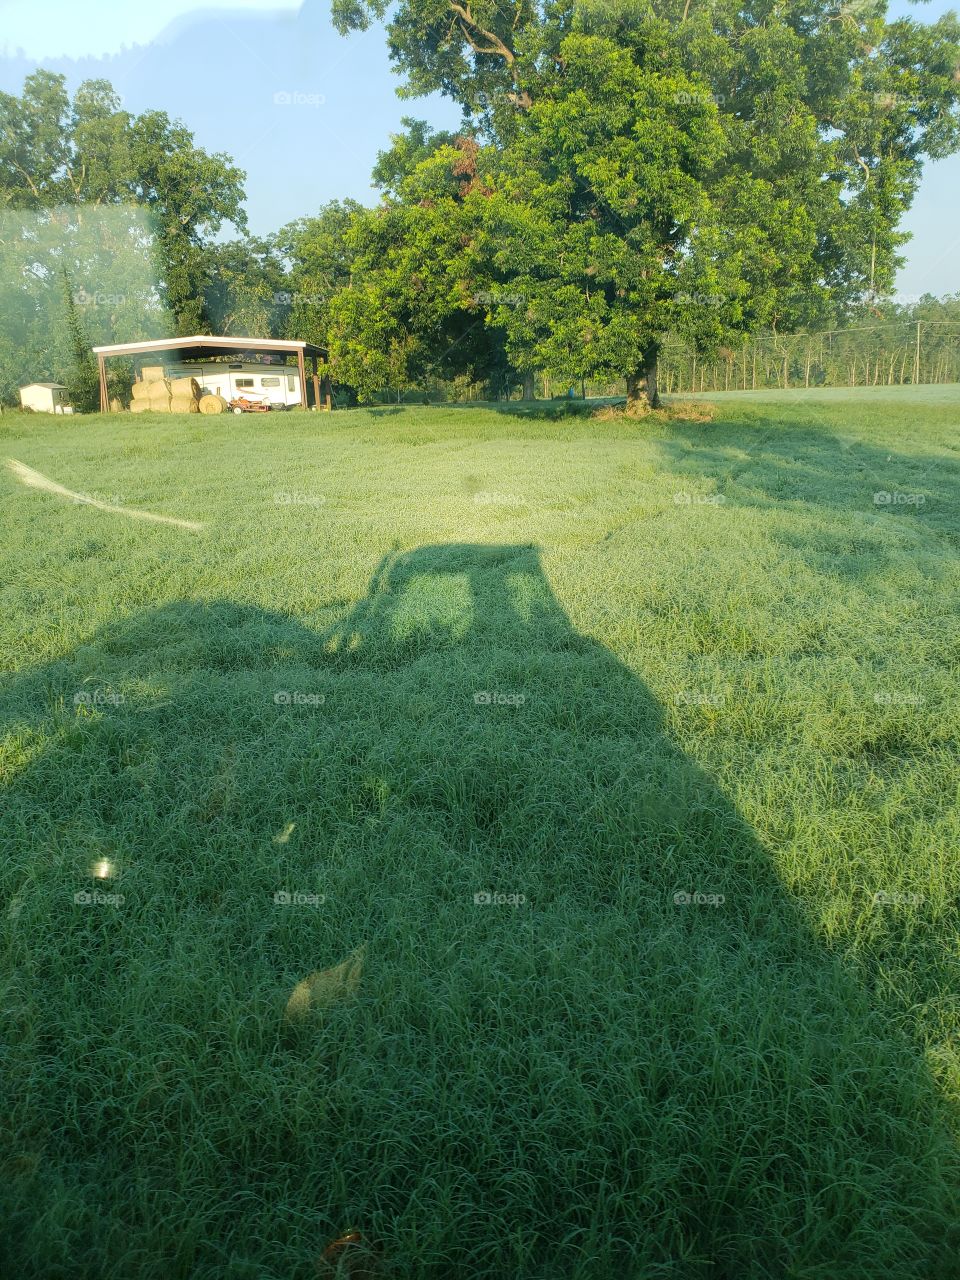 shadow tractor